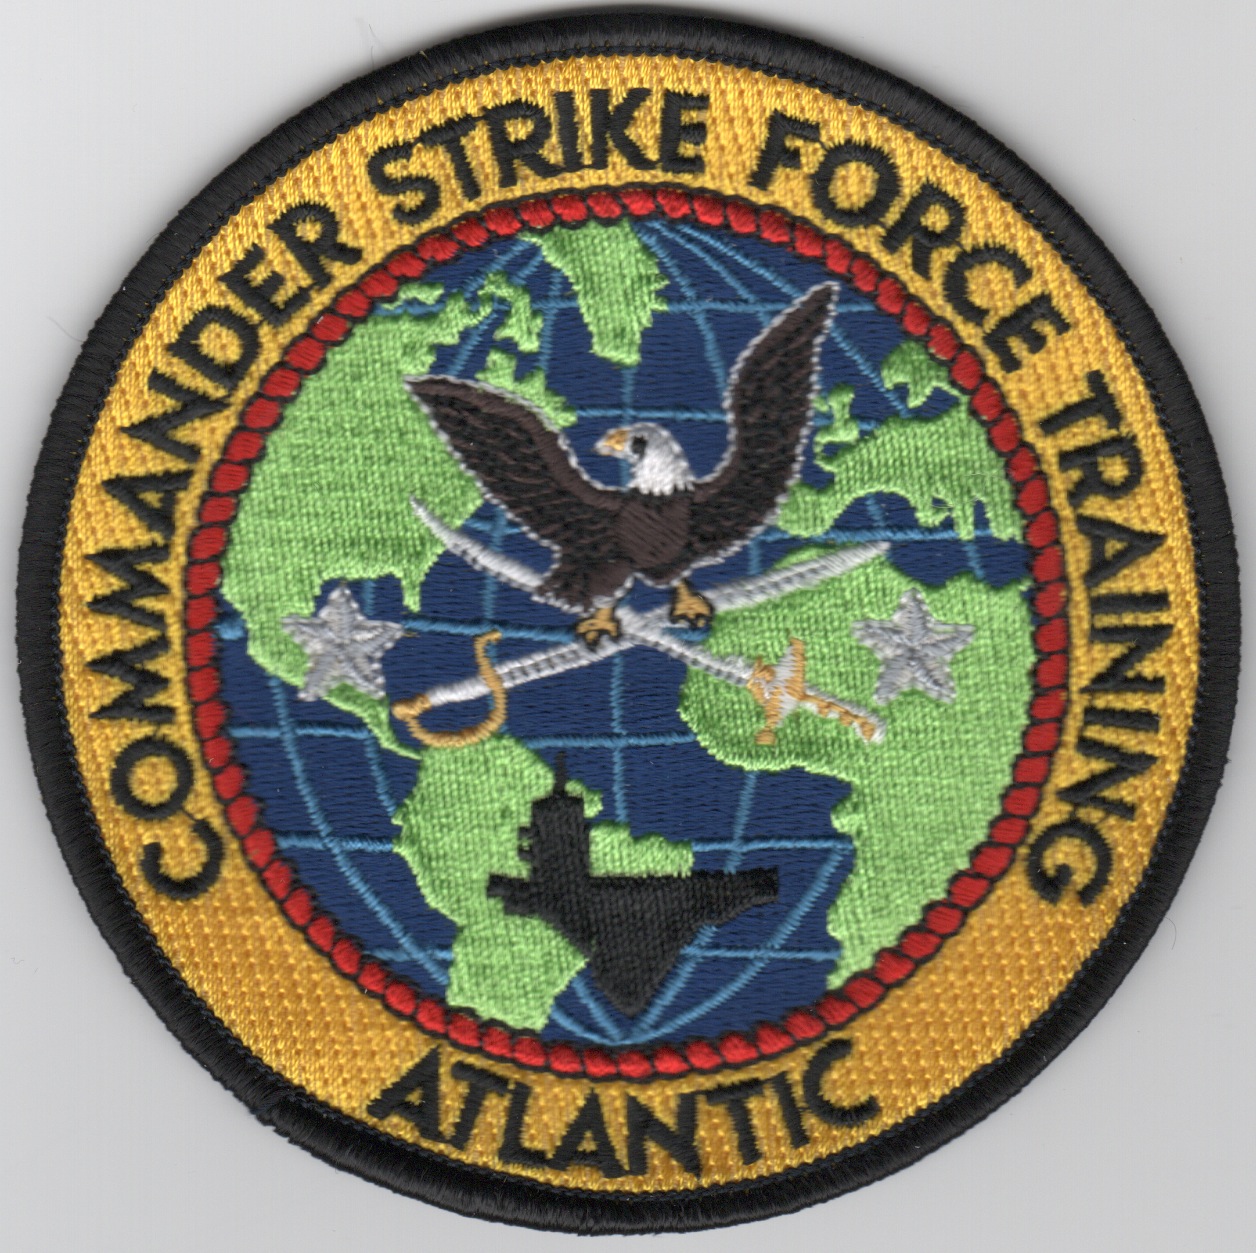 Commander, Strike Force Training-Atlantic